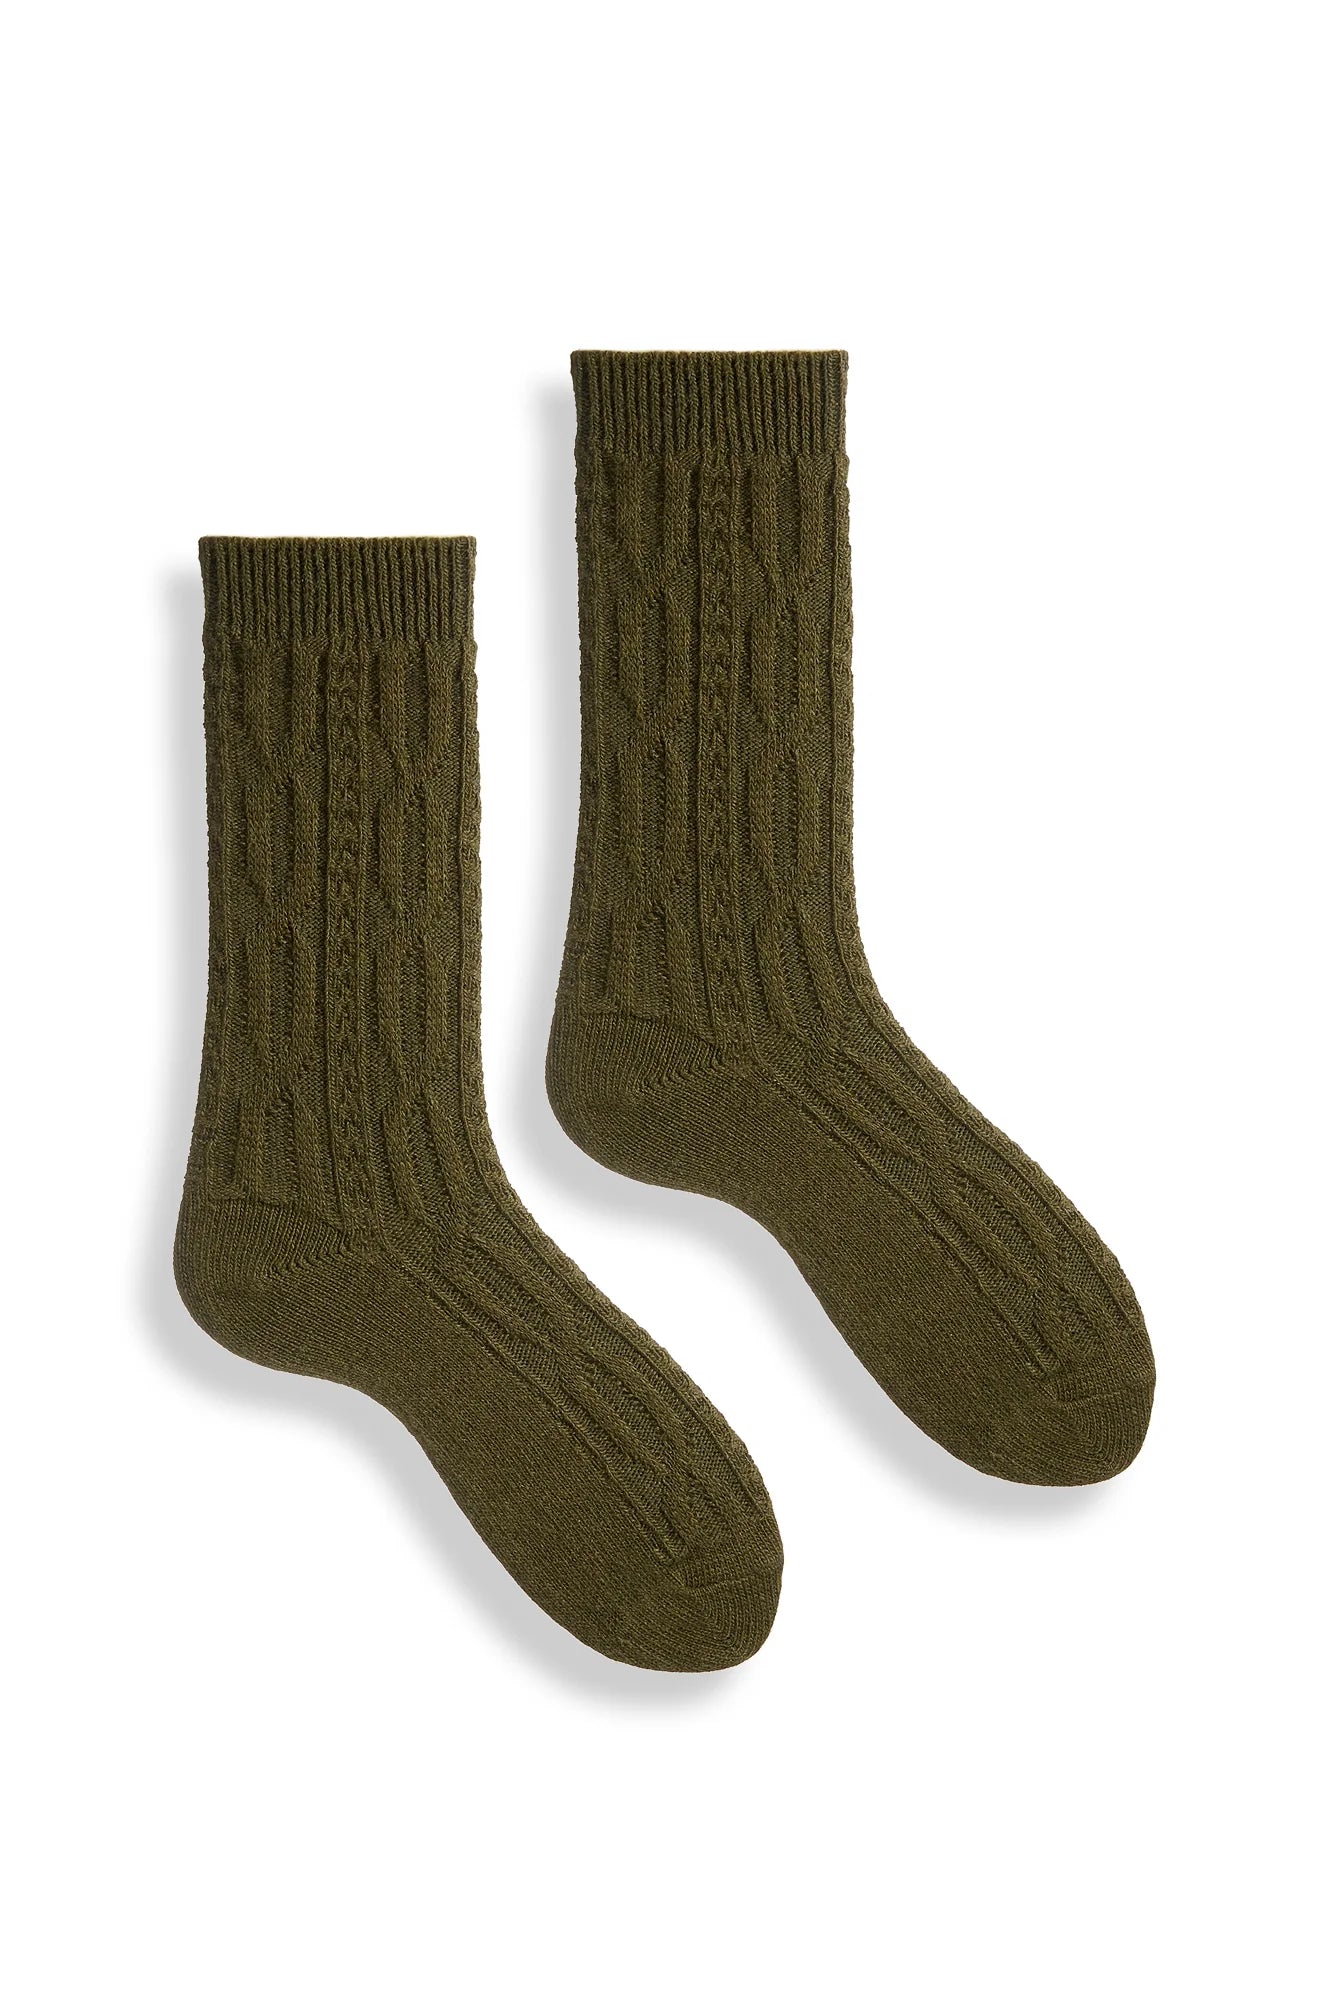 lisa b. / chunky cable wool cashmere crew socks